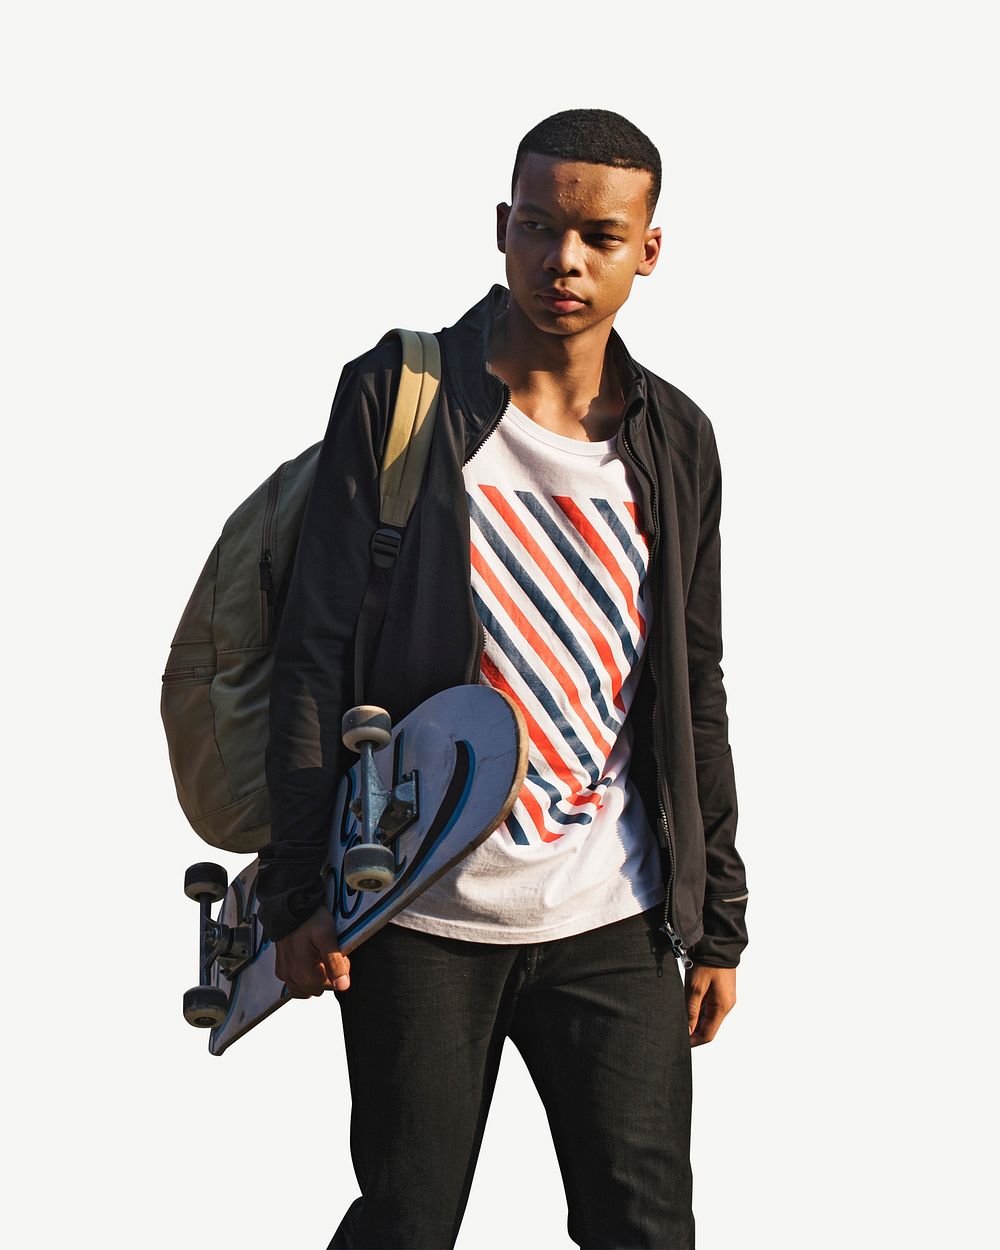 Teenage boy holding skateboard collage element psd